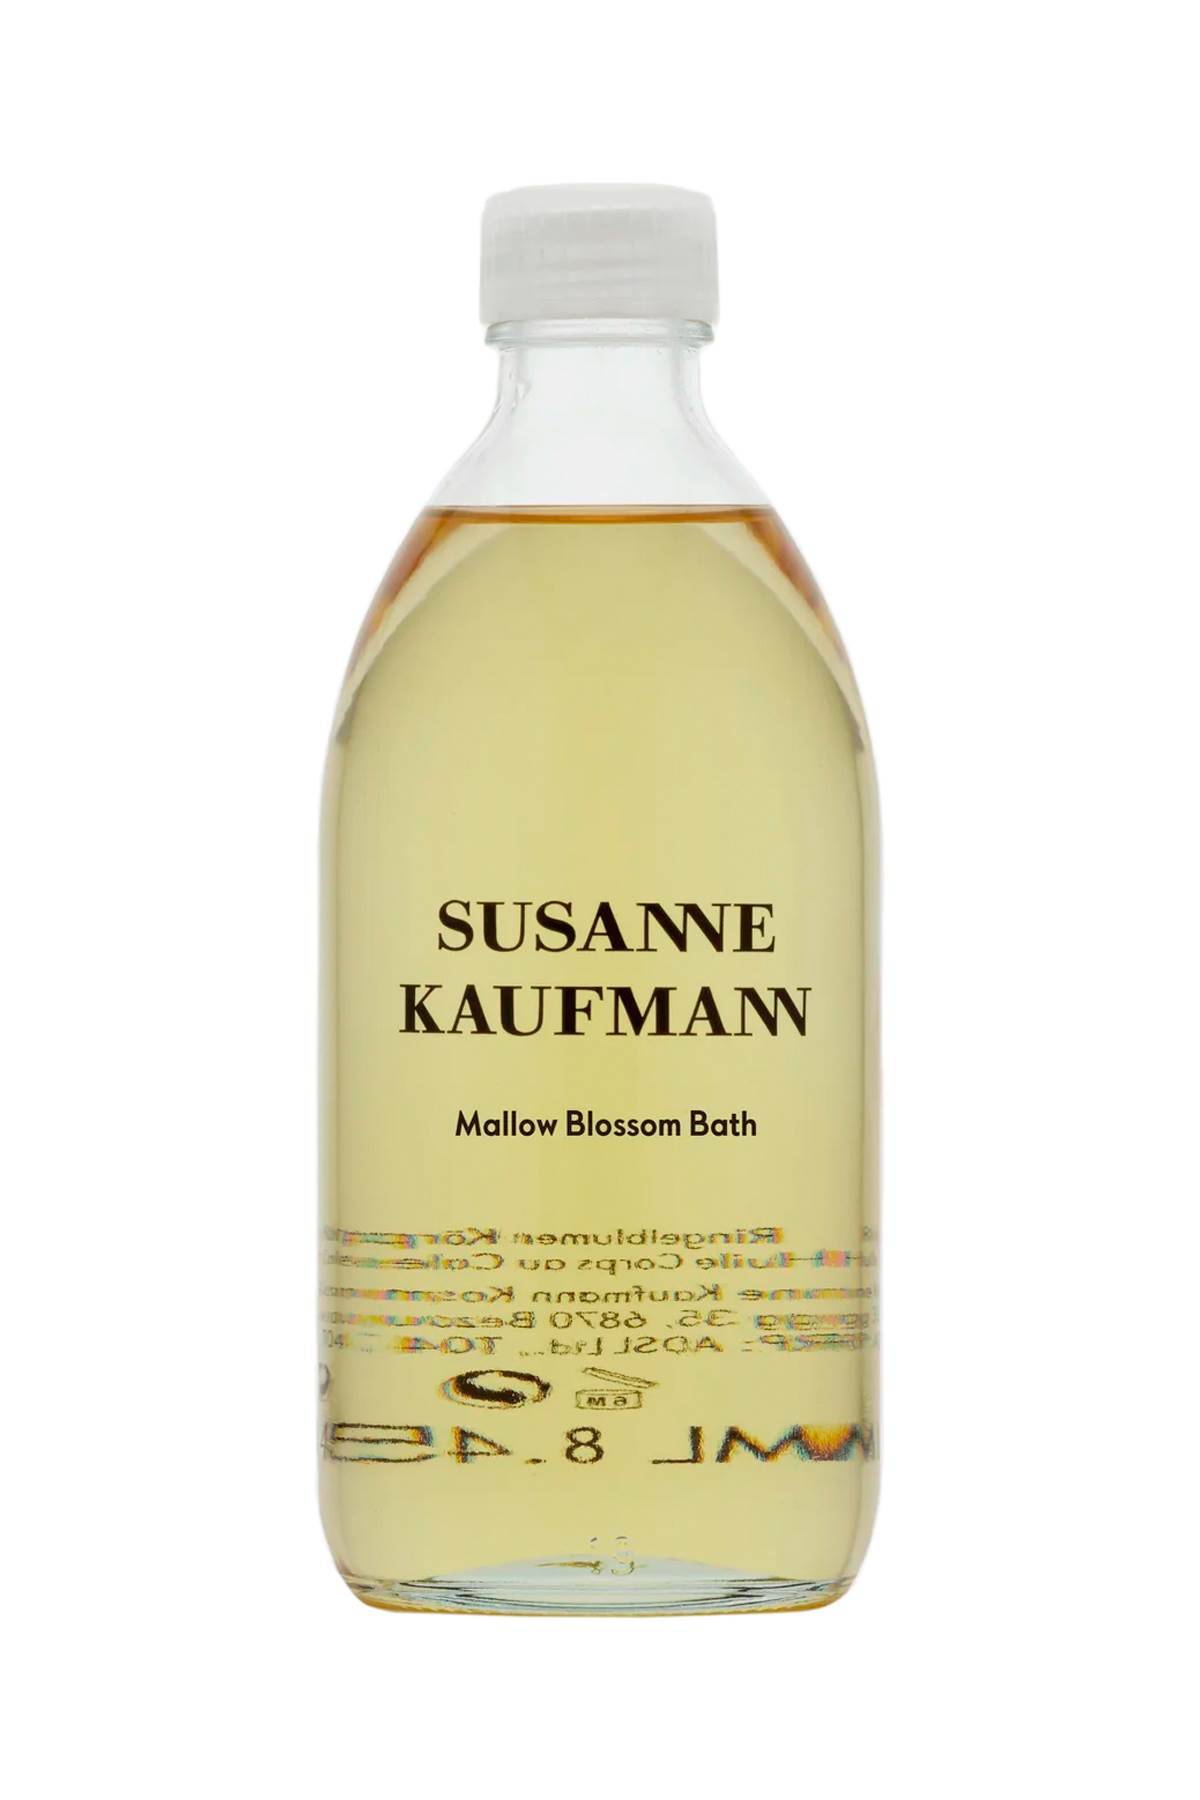 Susanne Kaufmann SUSANNE KAUFMANN mallow blossom bath - 250ml